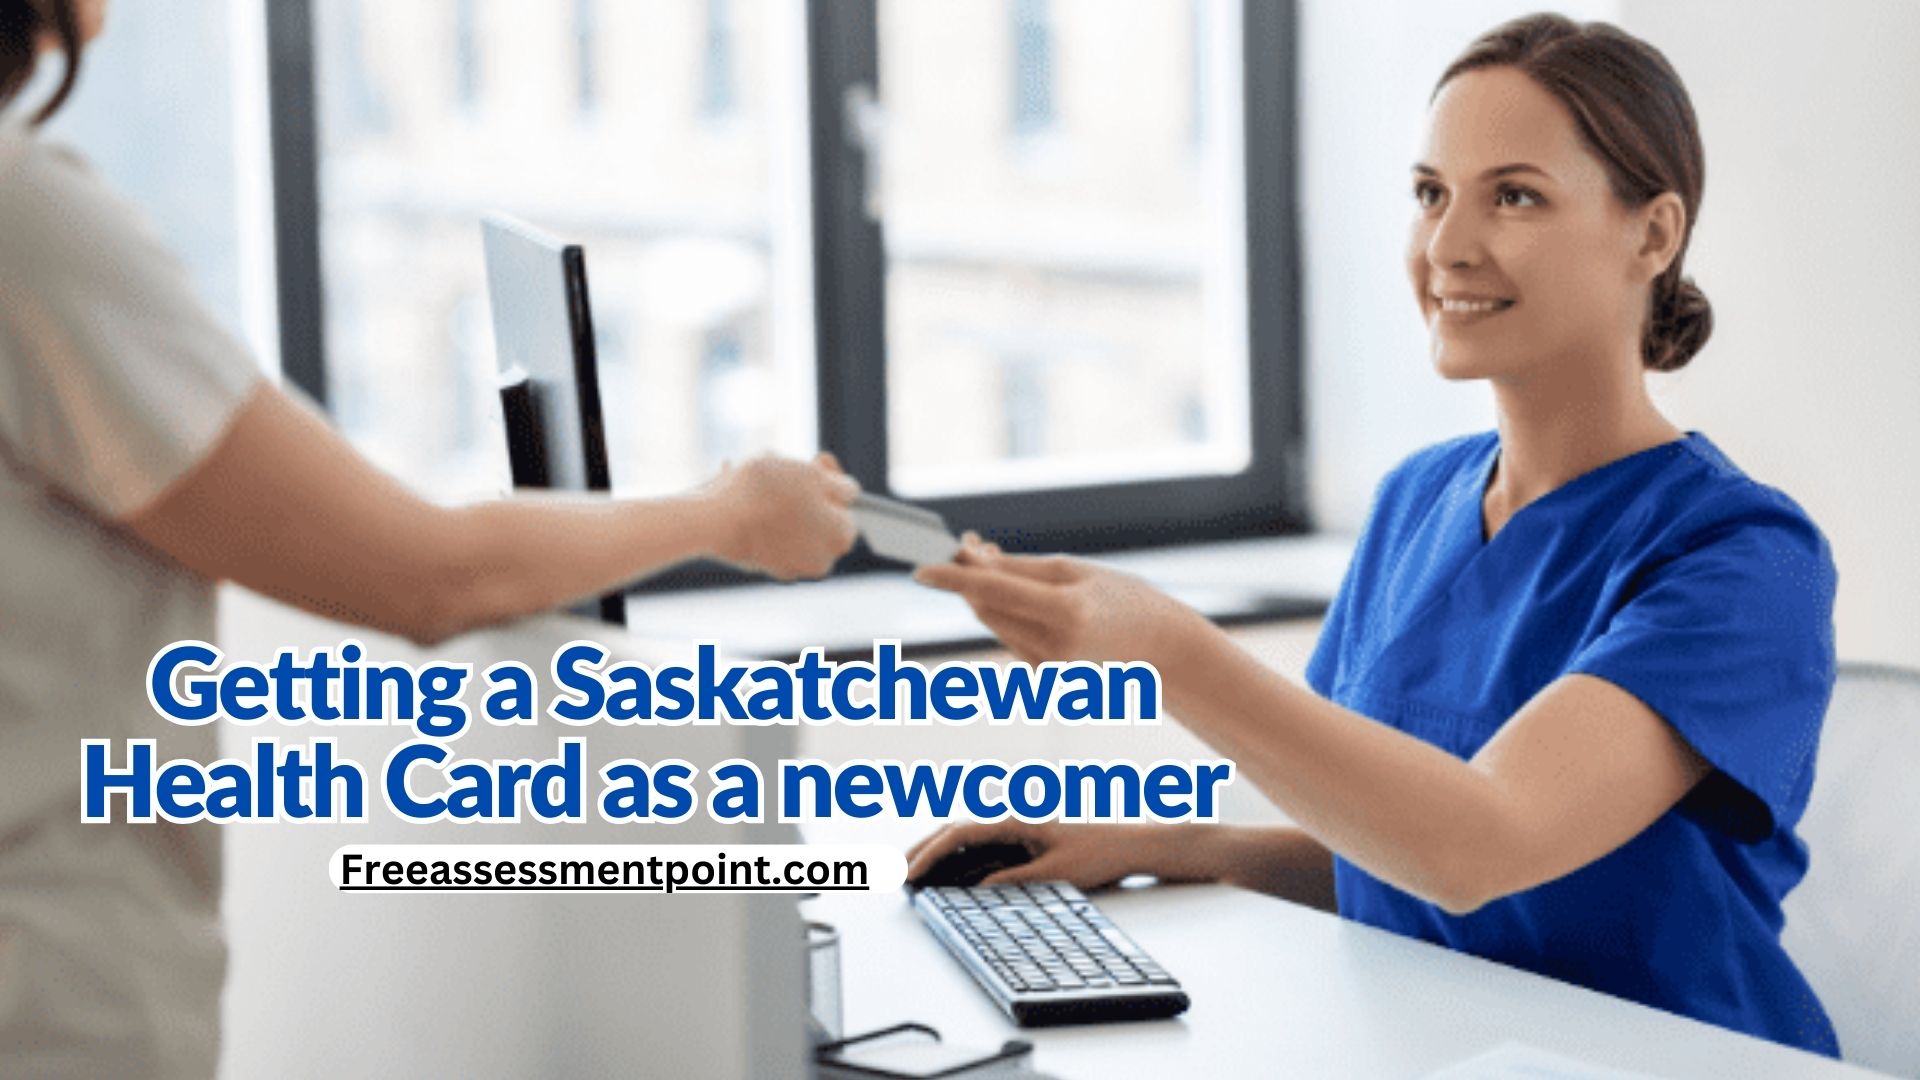 Getting a Saskatchewan Health Card as a newcomer